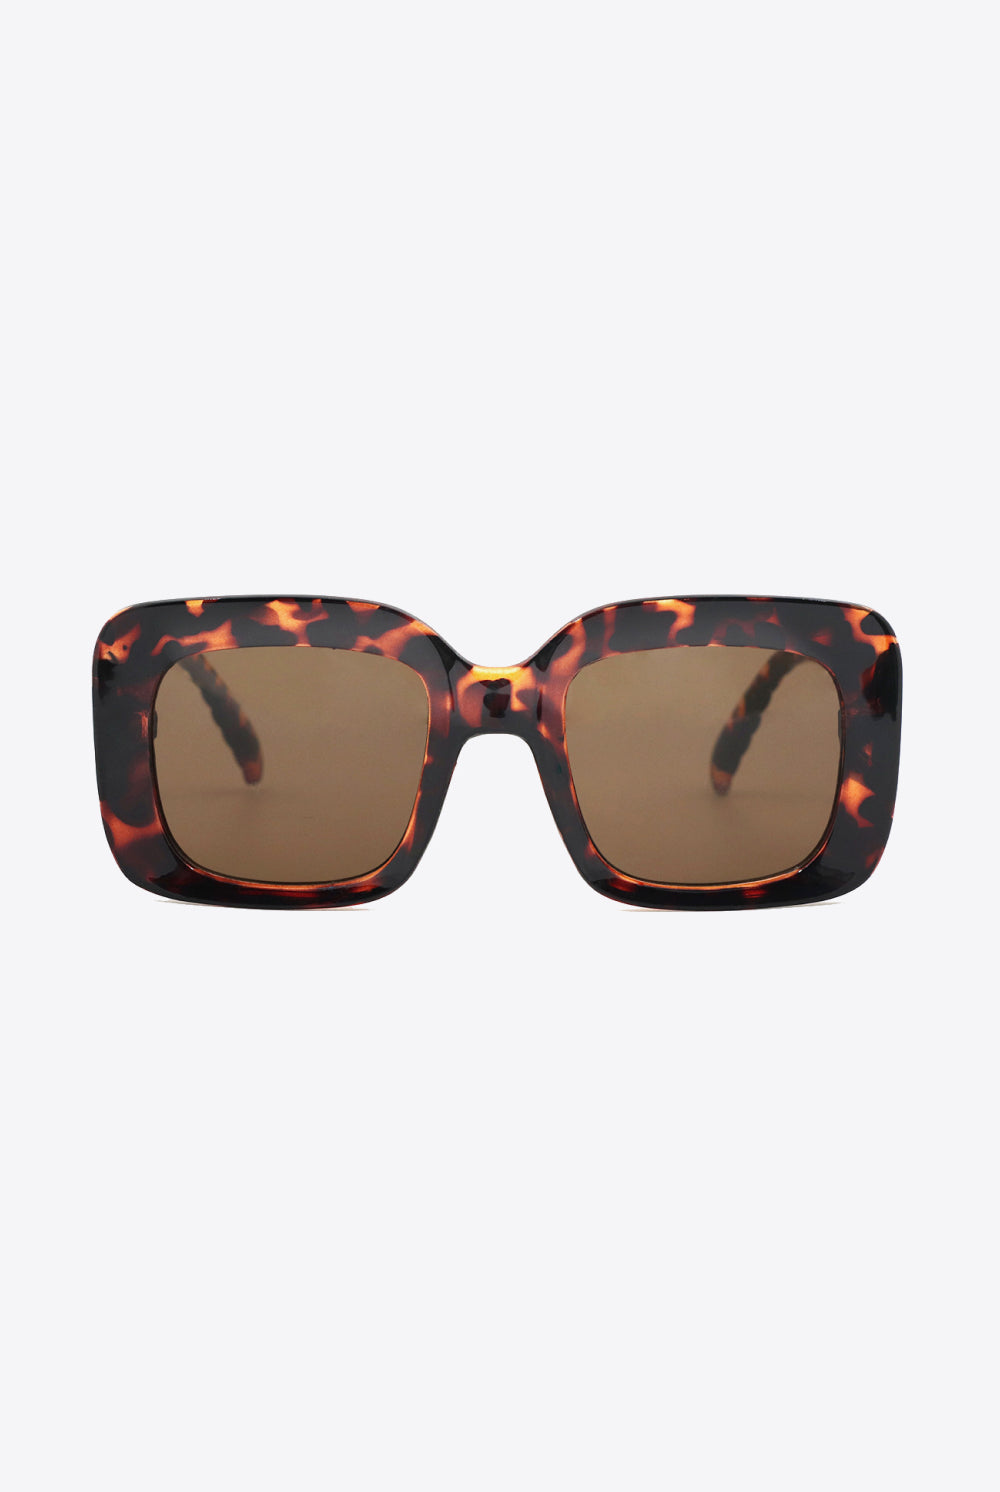 White Smoke Square Polycarbonate UV400 Sunglasses Sunglasses